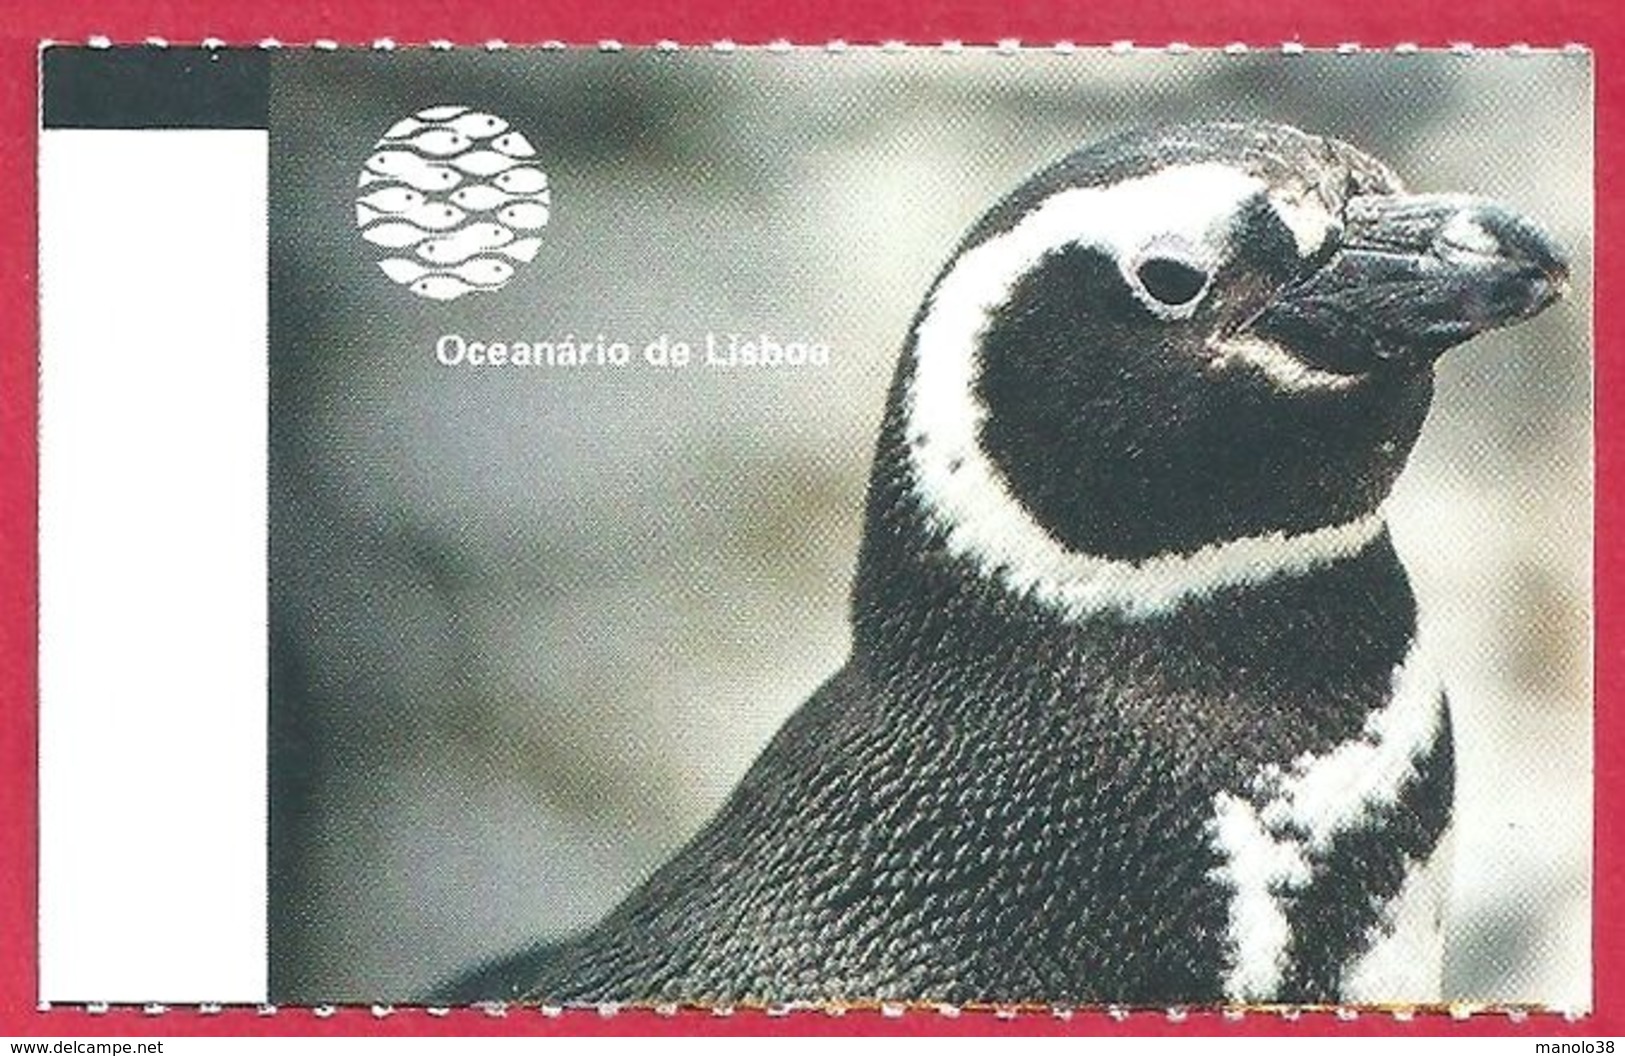 Ticket De L'aquarium De Lisbonne. Portugal. Visuel: Un Manchot Du Cap. 2019. - Tickets D'entrée